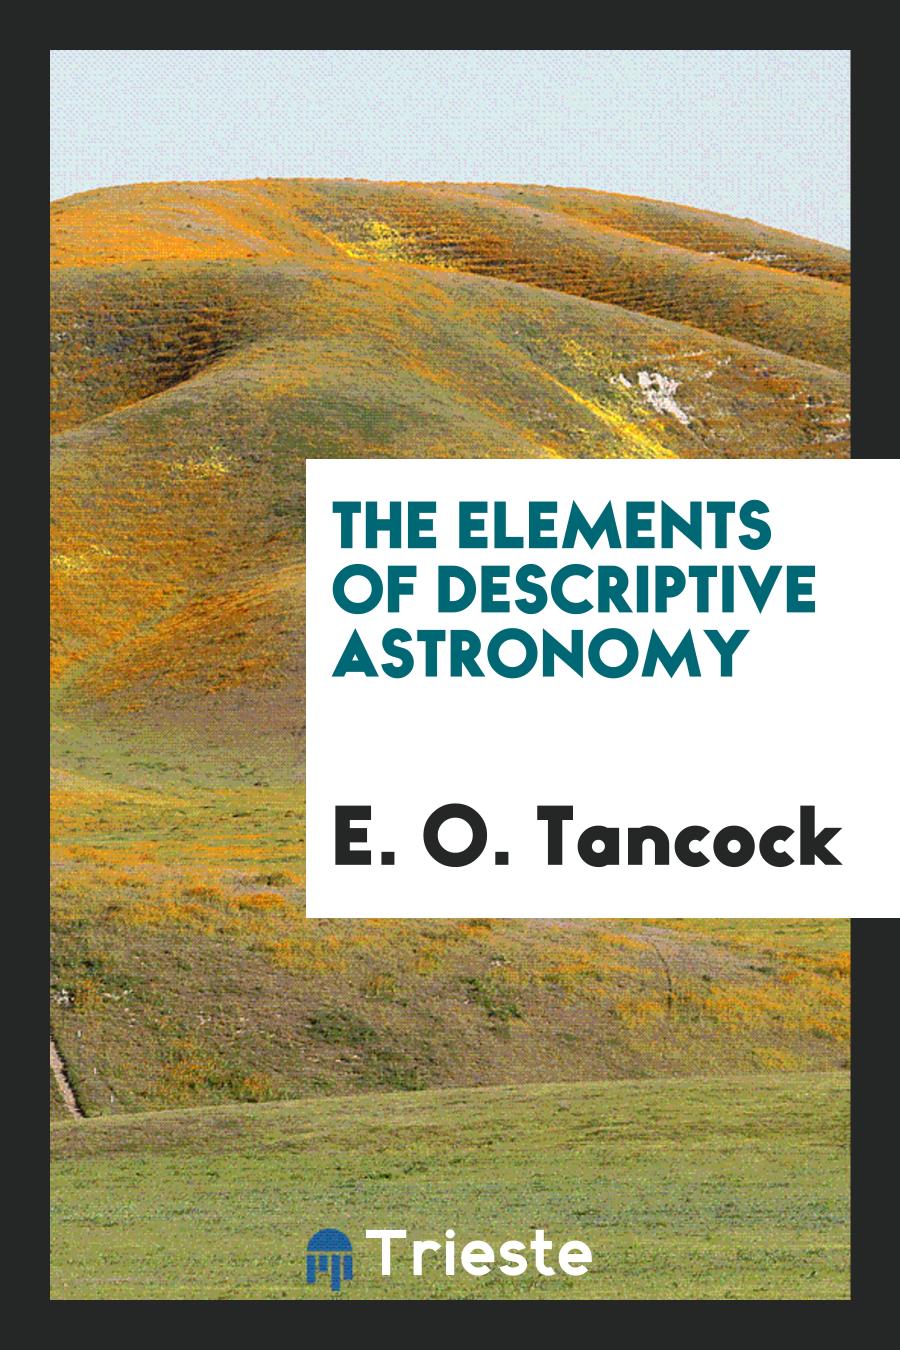 The Elements of Descriptive Astronomy